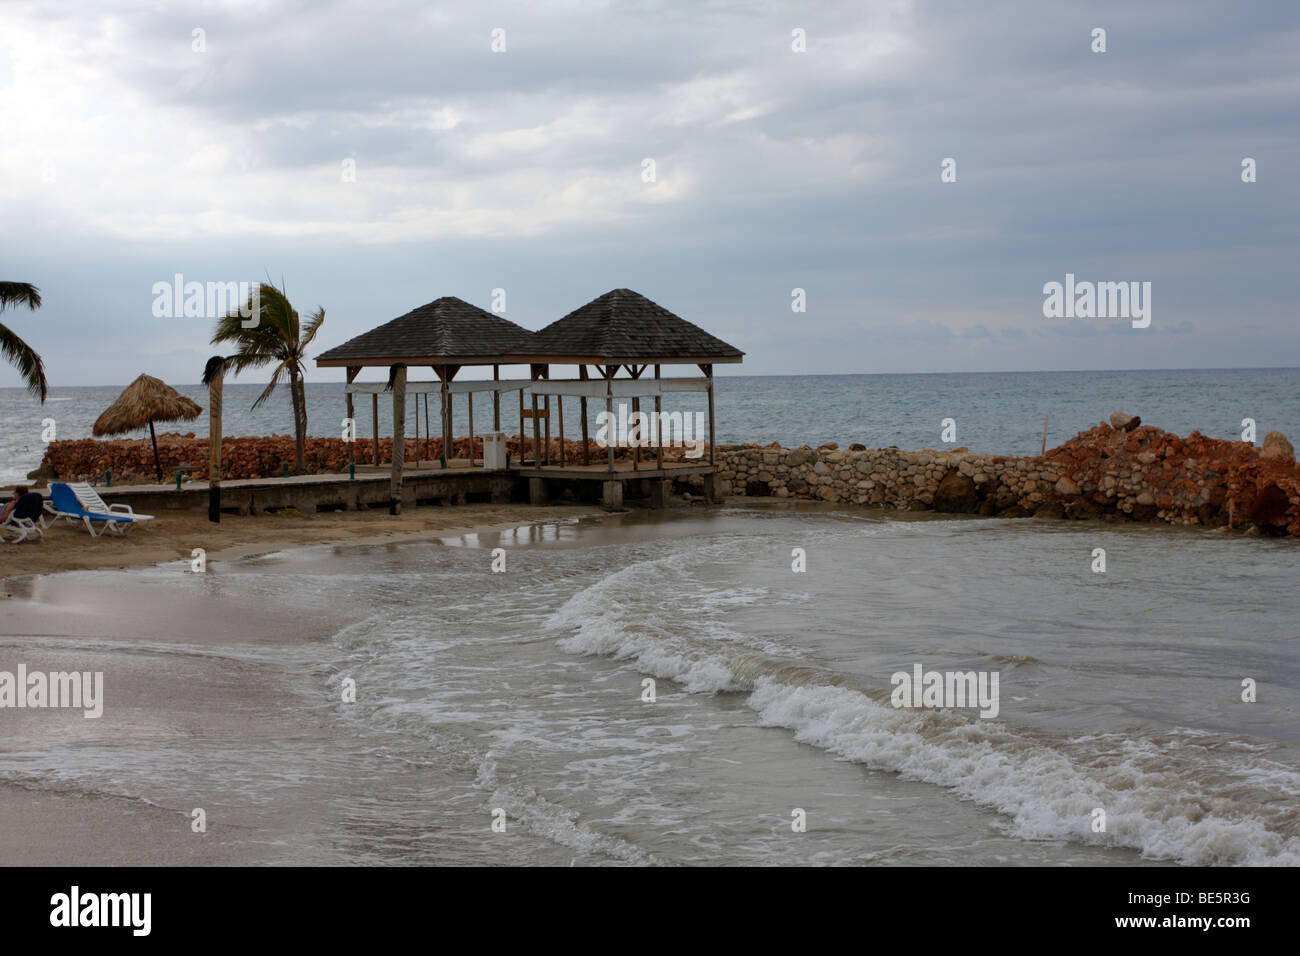 Empty seaside hut Frames at Royal Decameron Caribbean resort Stock Photo